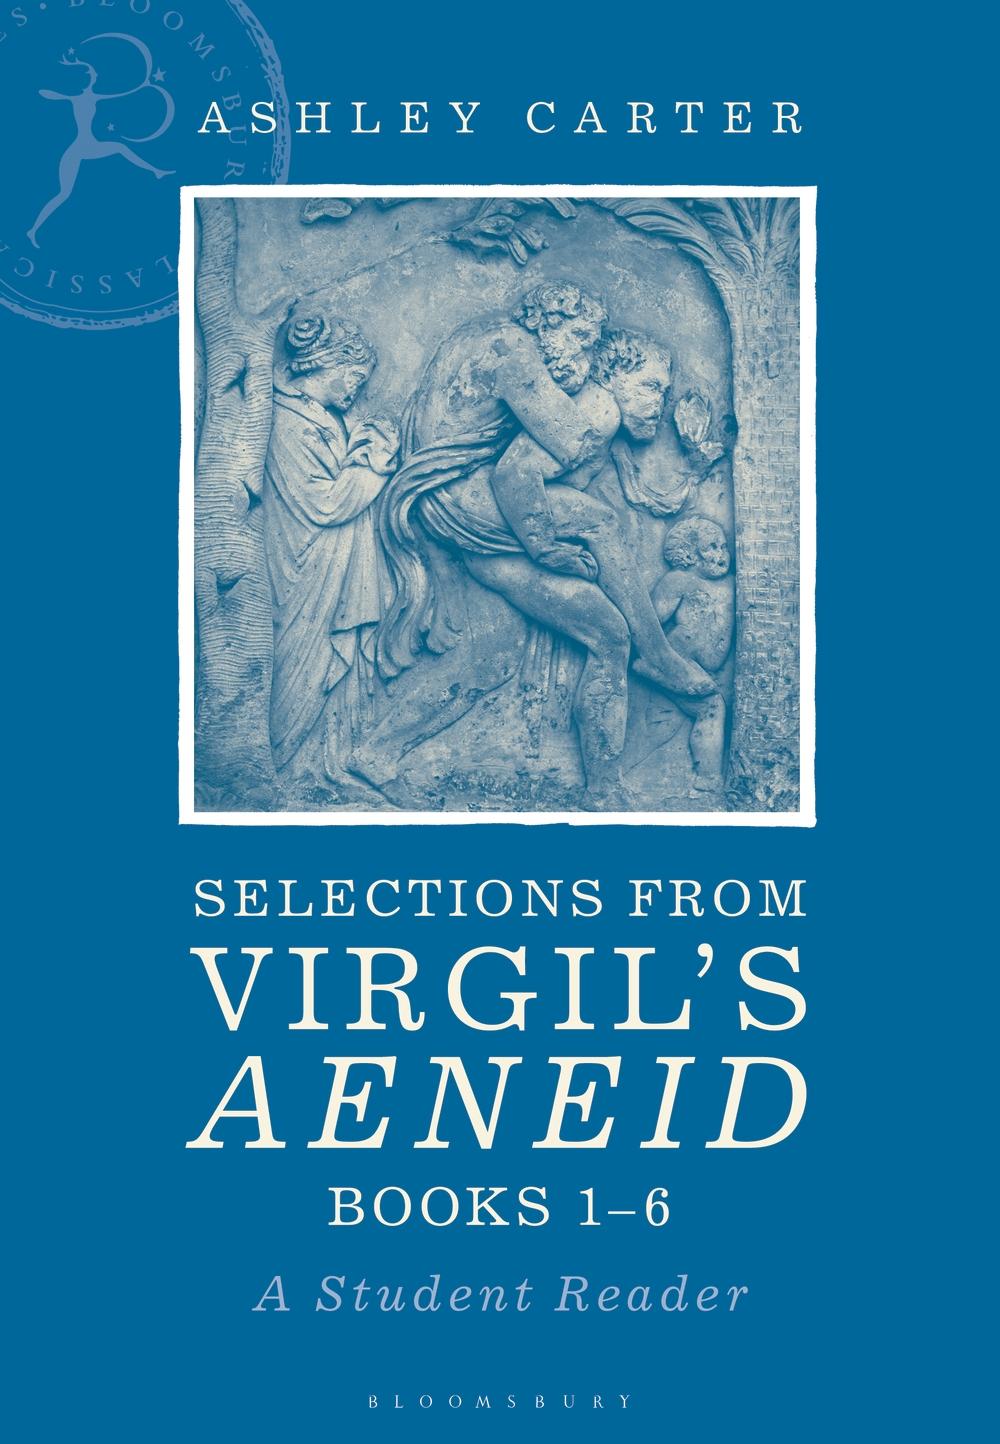 Selections from Virgil's Aeneid Books 1-6 - Ashley Carter